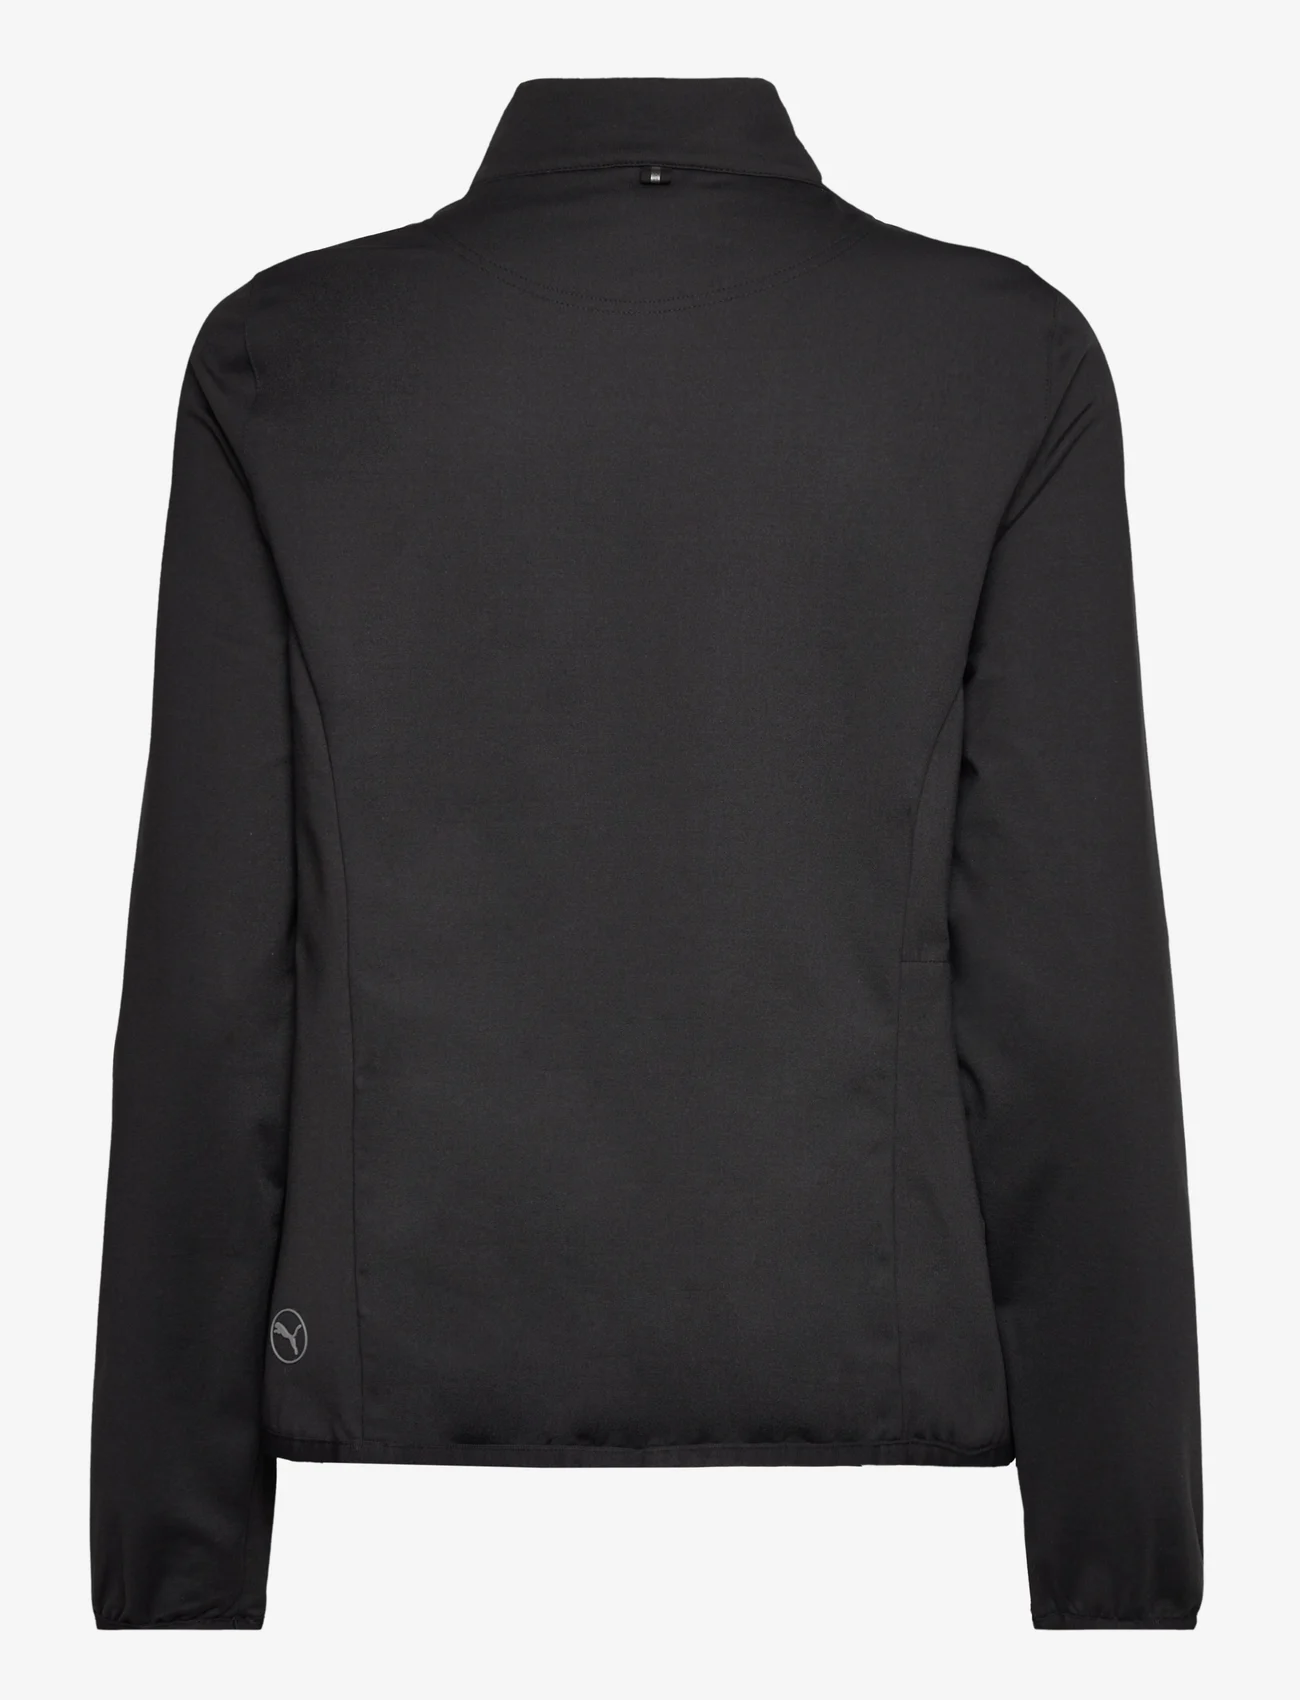 PUMA Golf - W Frost Quilted Jacket - spring jackets - puma black-slate sky - 1